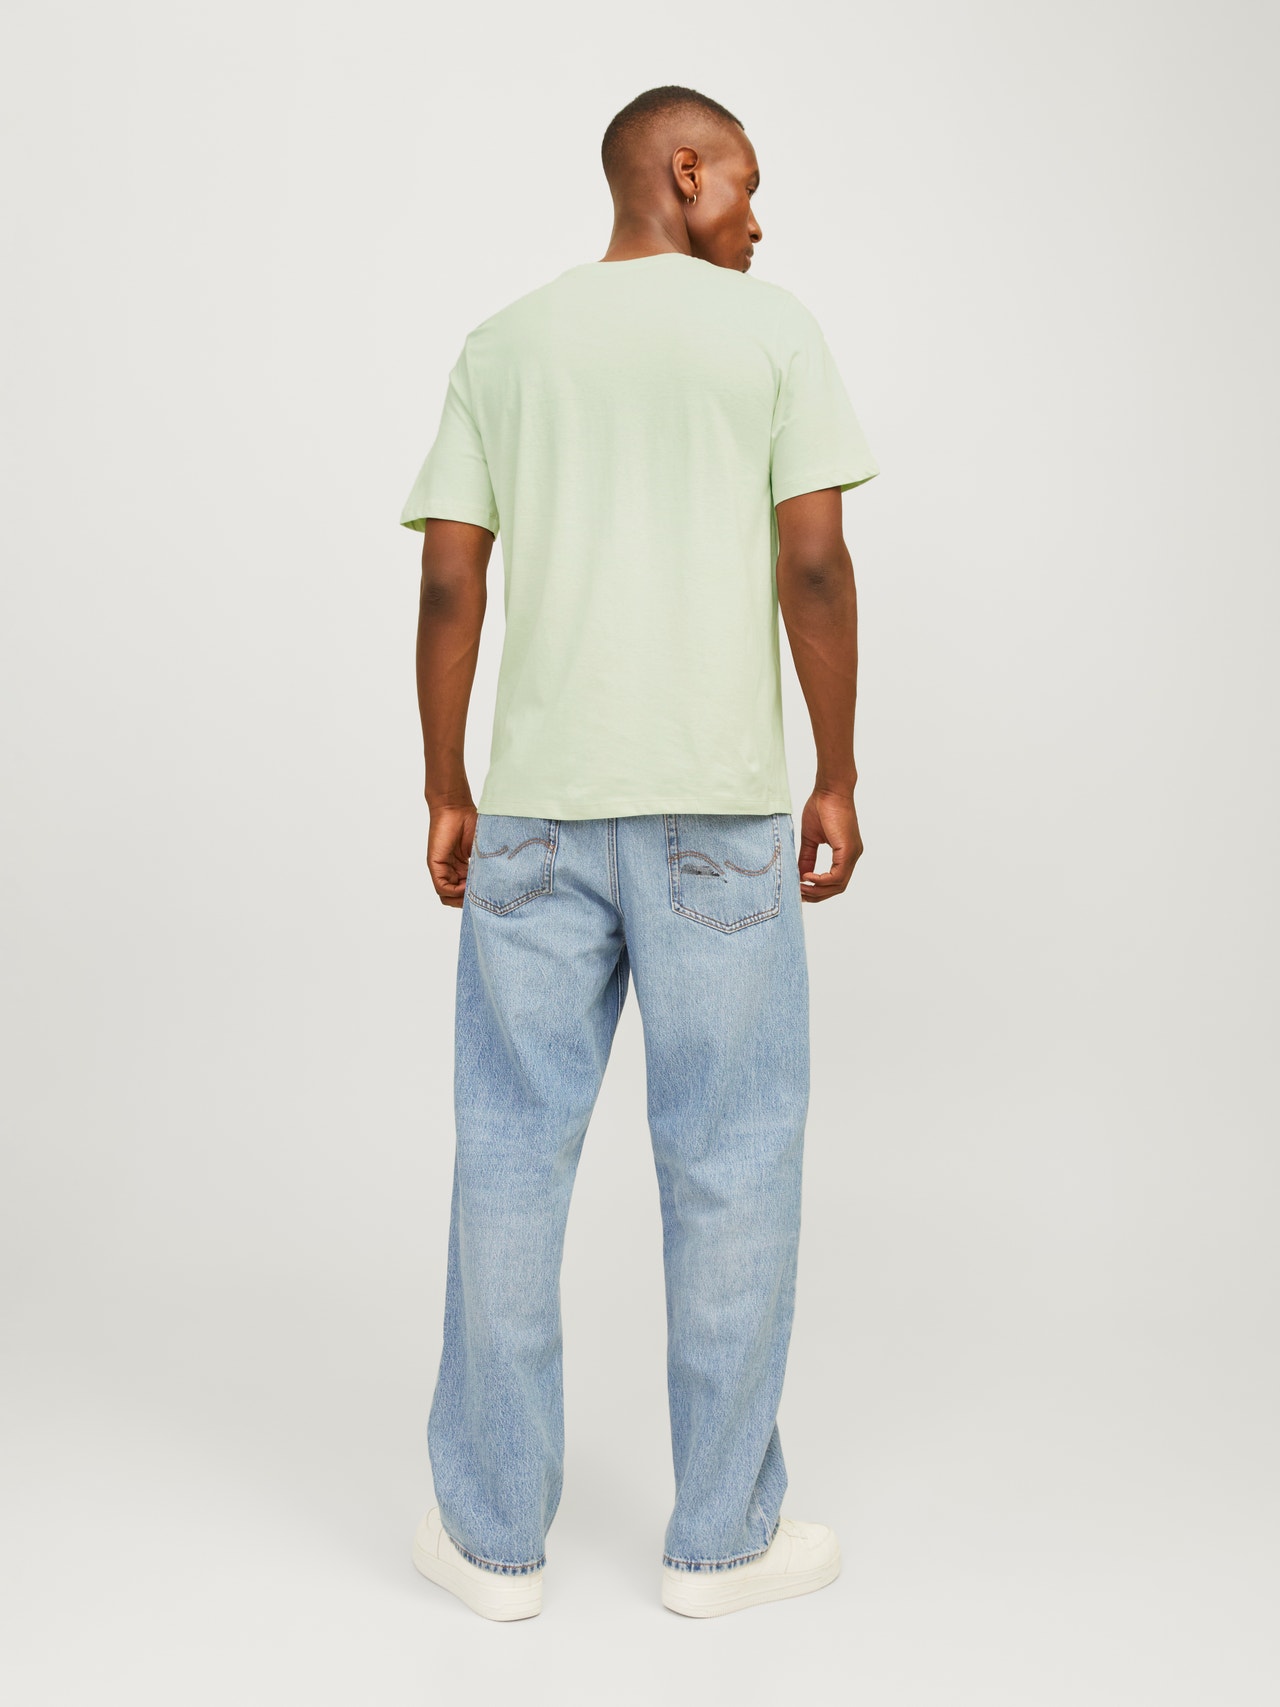 Jack & Jones T-shirt Estampar Decote Redondo -Green Tint - 12255165